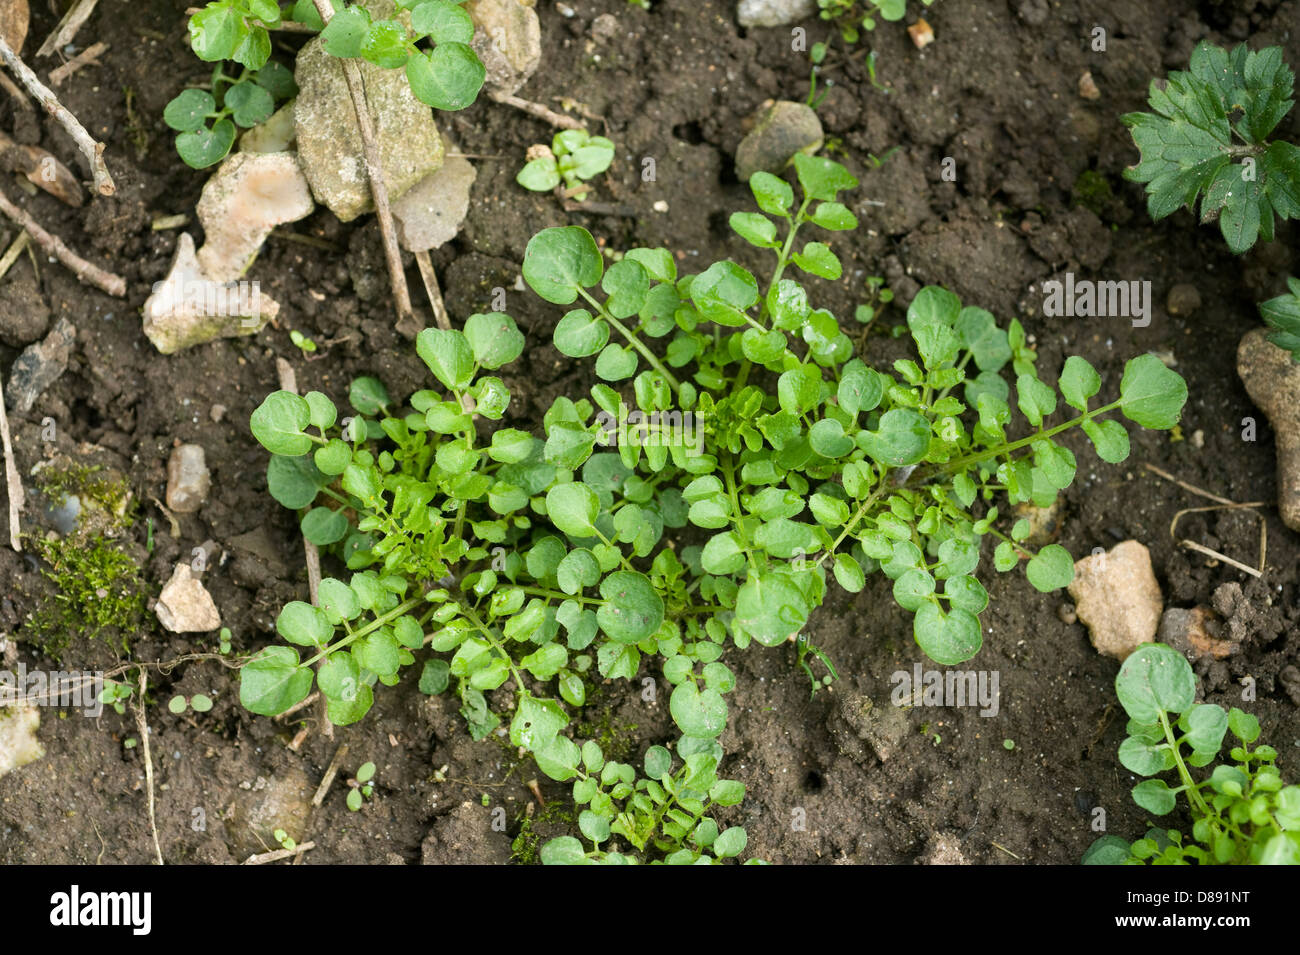 Young plants of hairy bittercress, Cardamine hirsuta, on soil Stock Photo